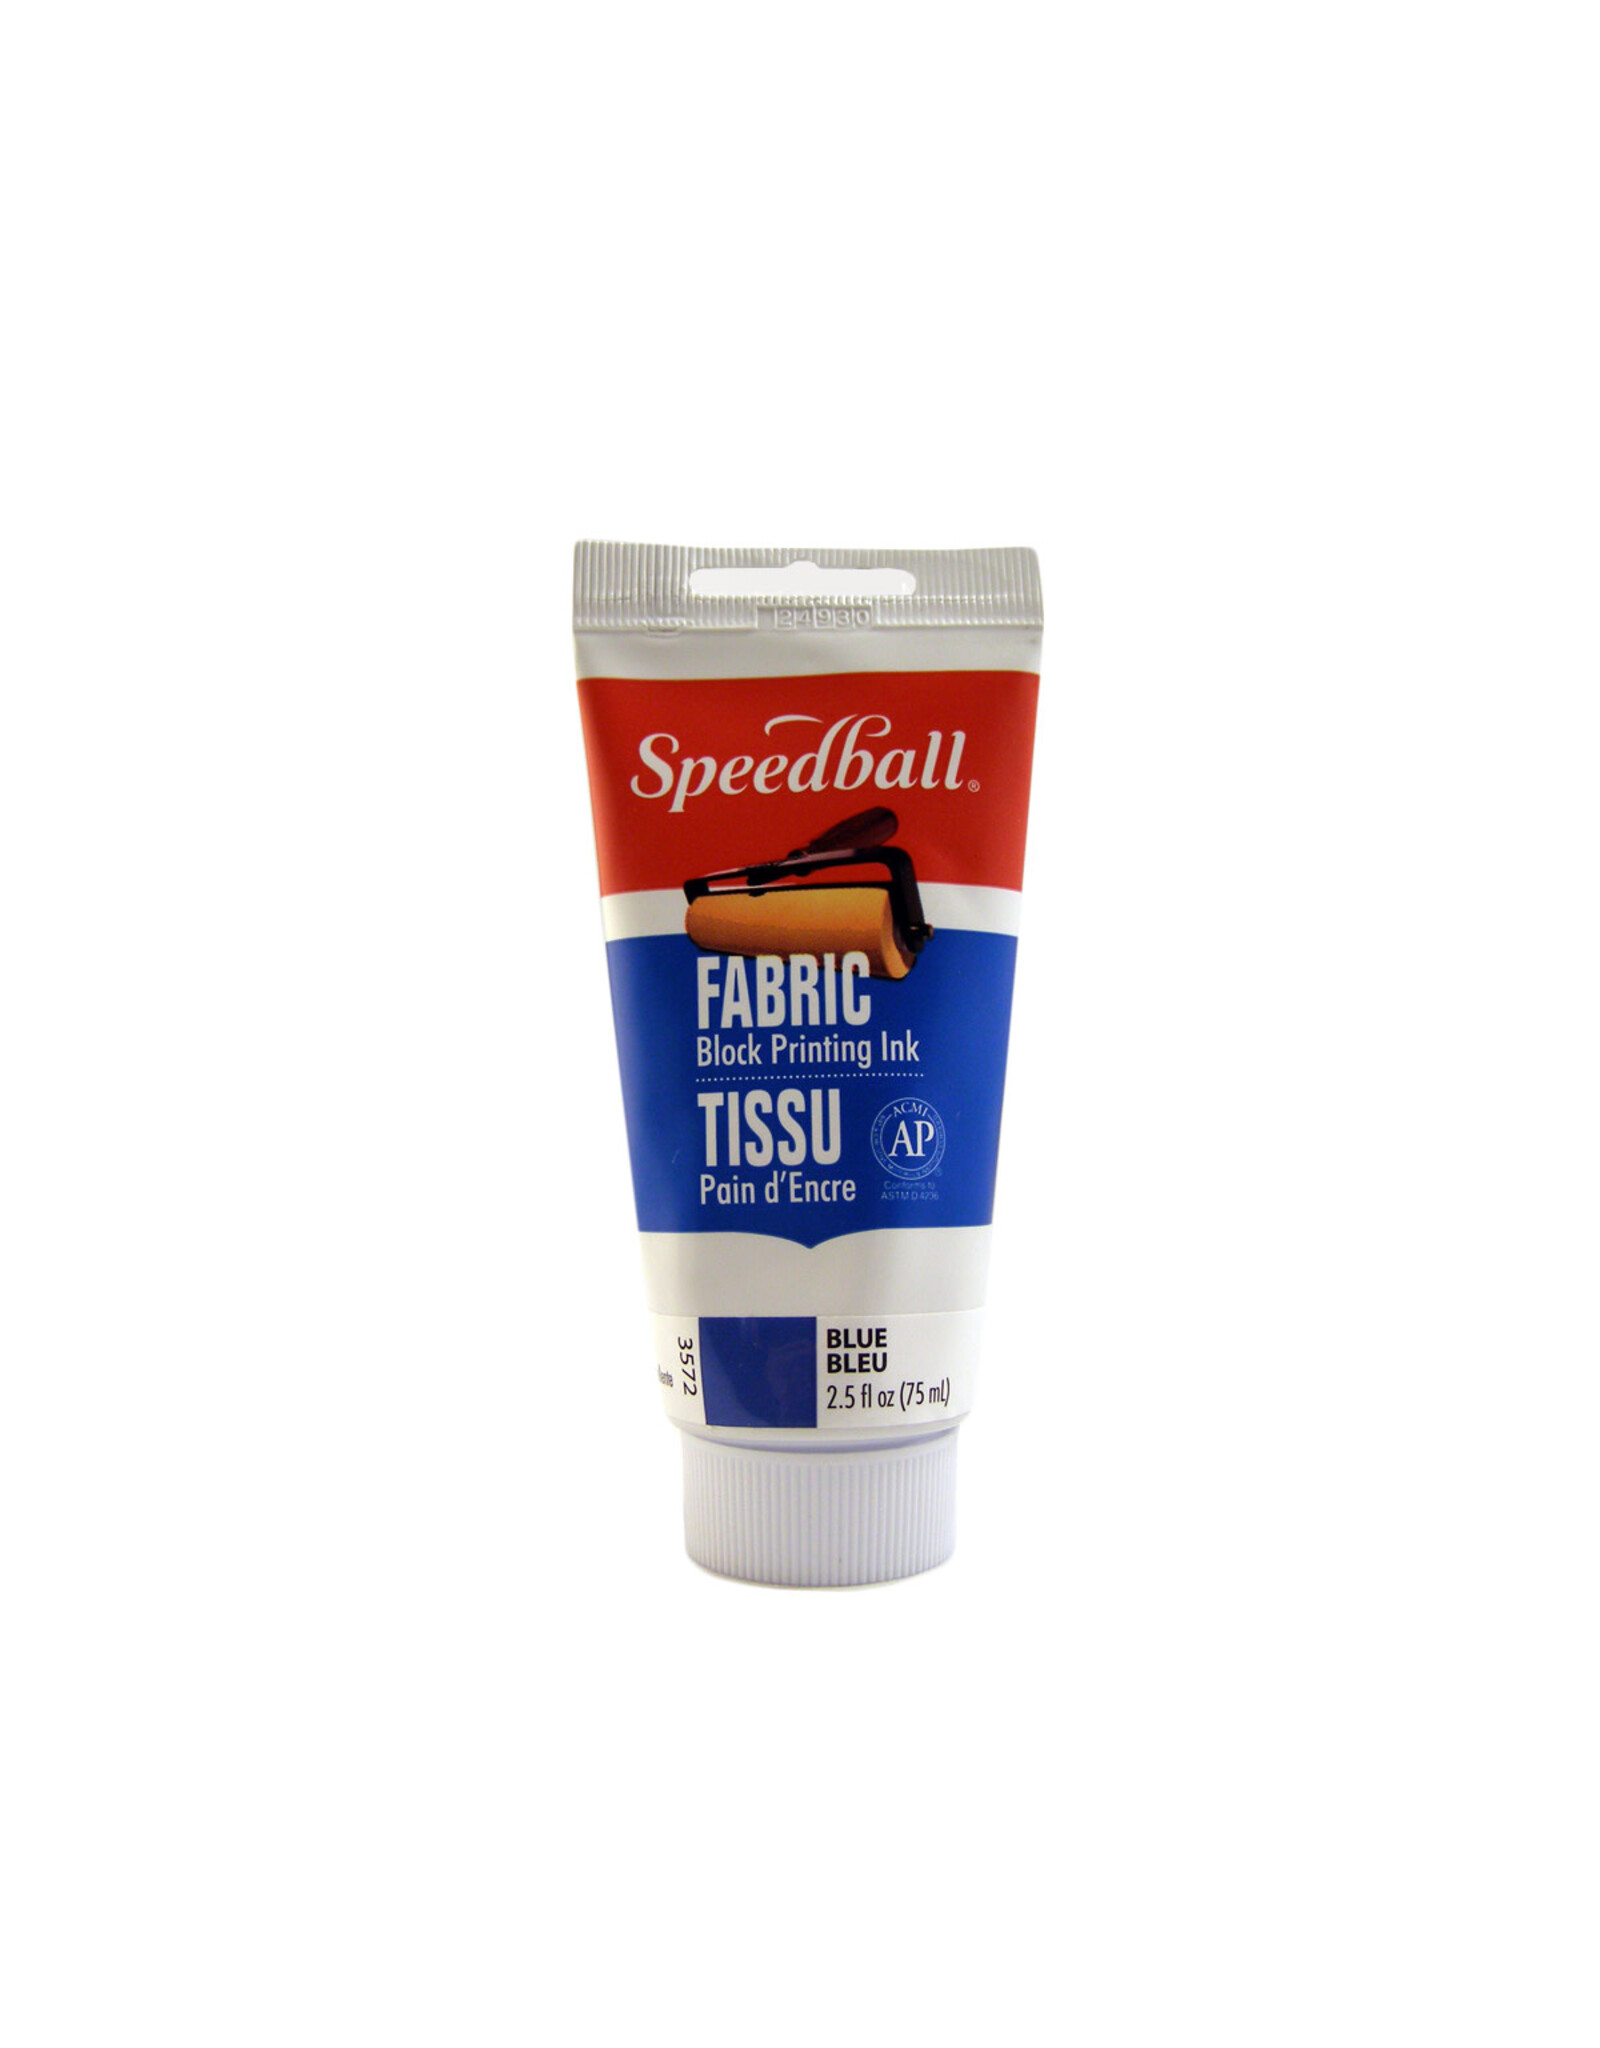 SPEEDBALL ART PRODUCTS Speedball Fabric Block Printing Ink, Blue, 2.5 oz